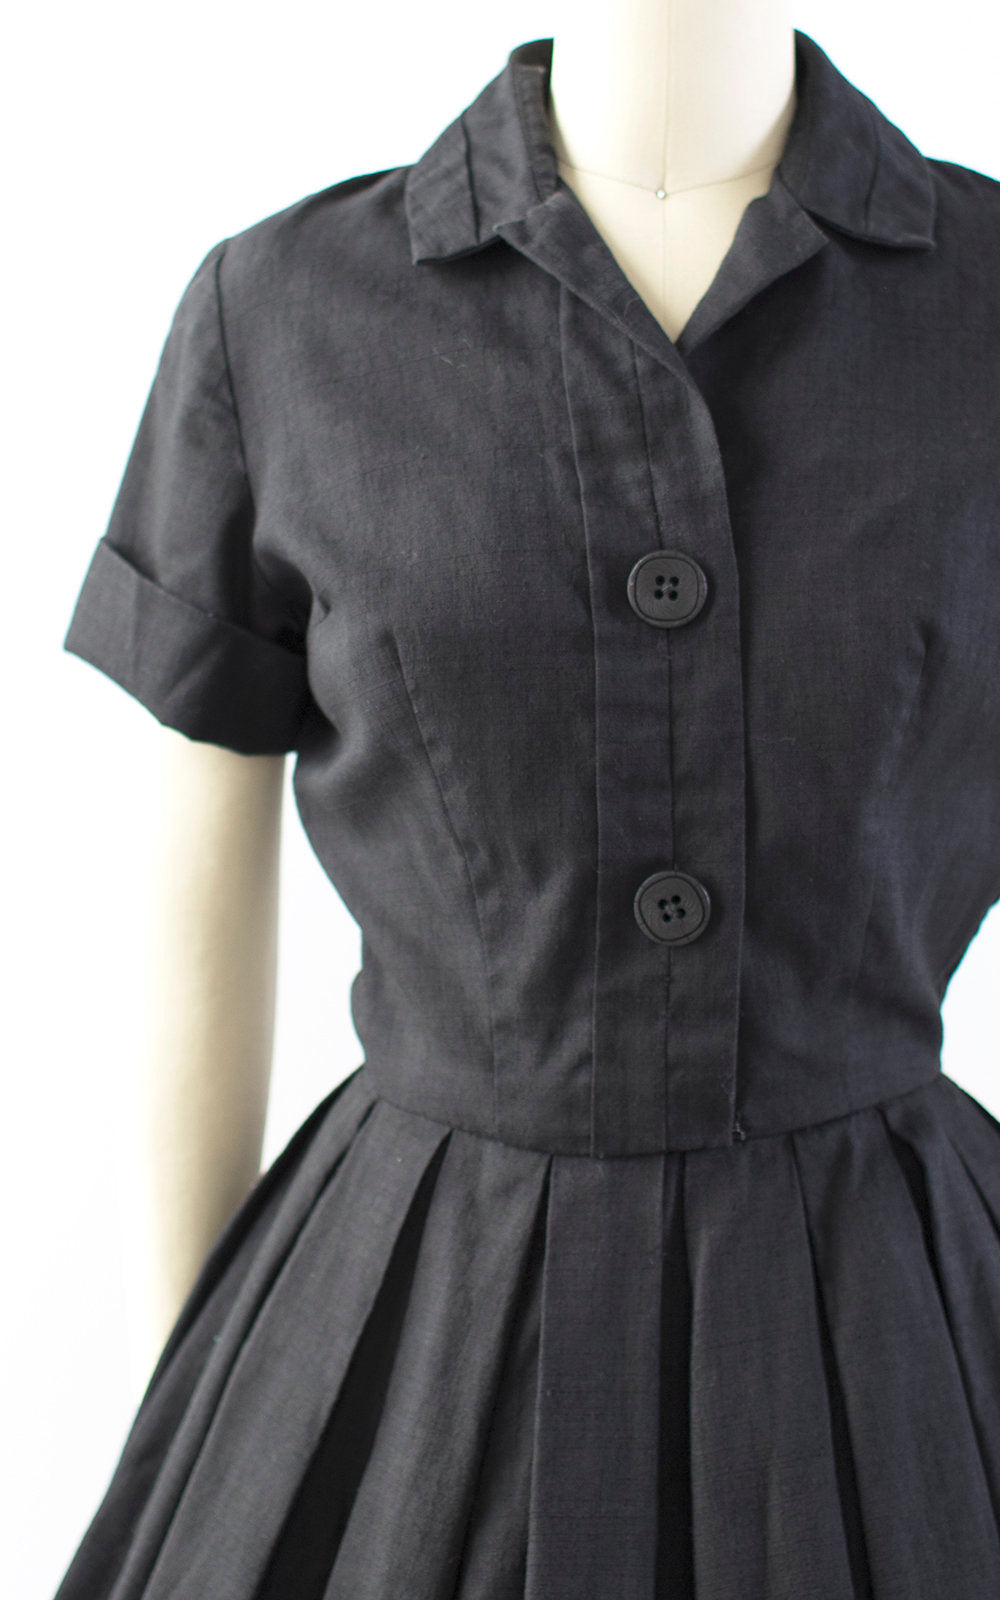 Vintage 1950s Dress | 50s HOLLY HOELSCHER Black Cotton Shirt Dress Circle Skirt Shirtwaist Day Dress with Pockets (x-small)